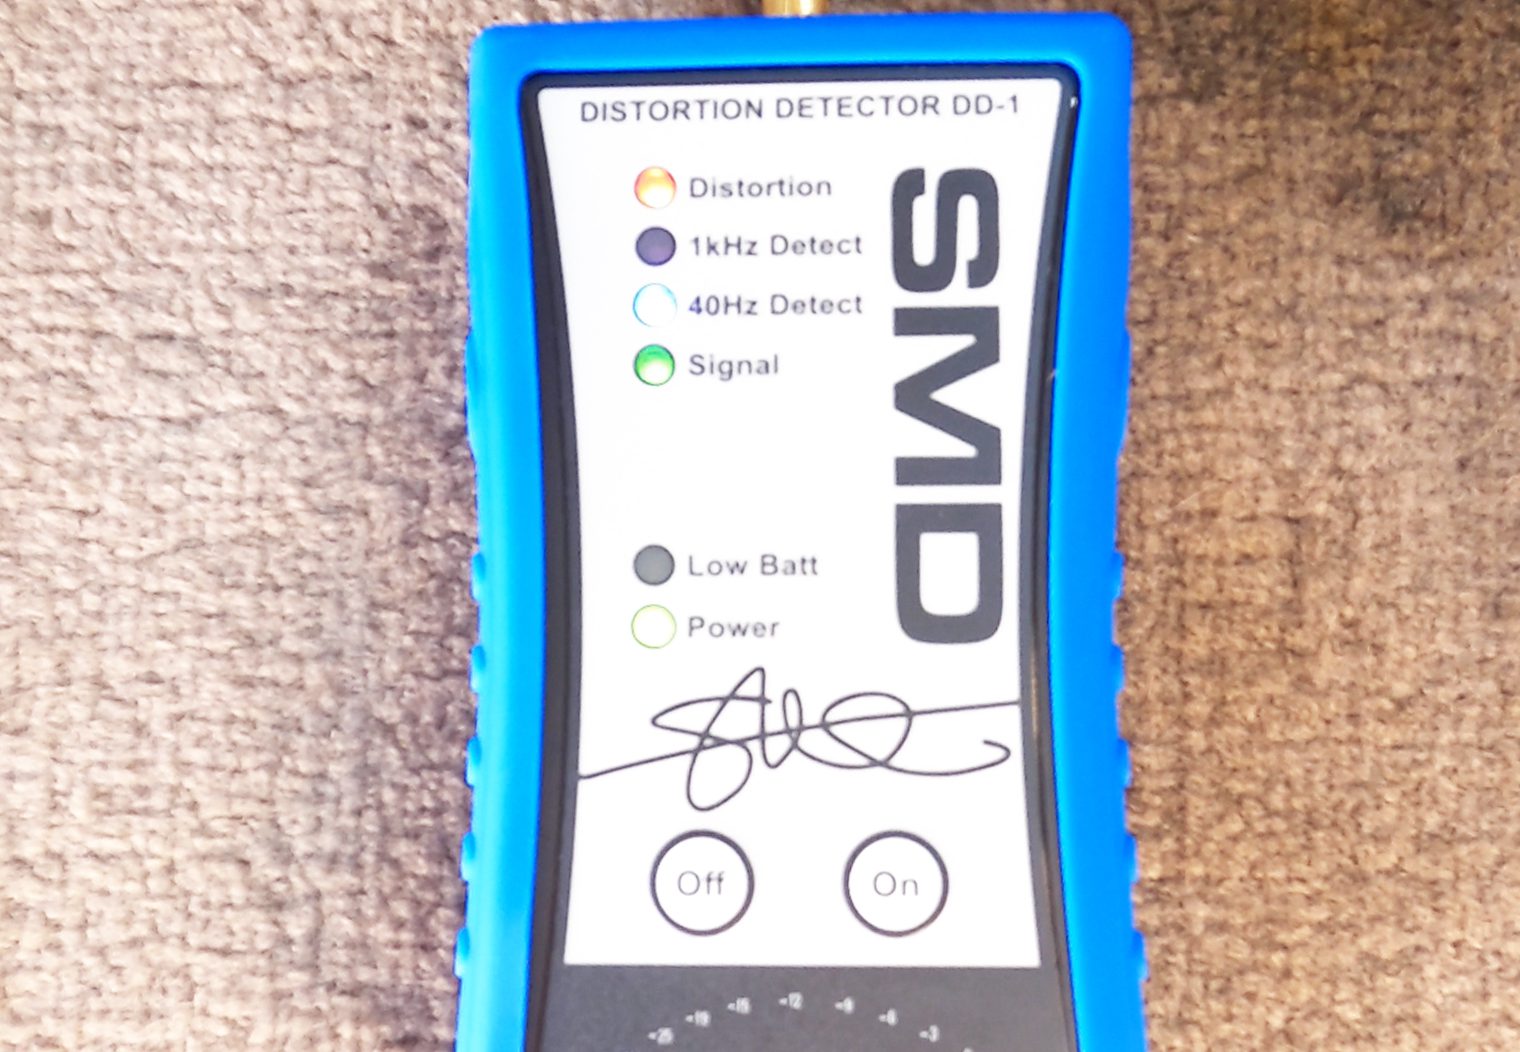 SMD DD-1 distortion detector showing distortion